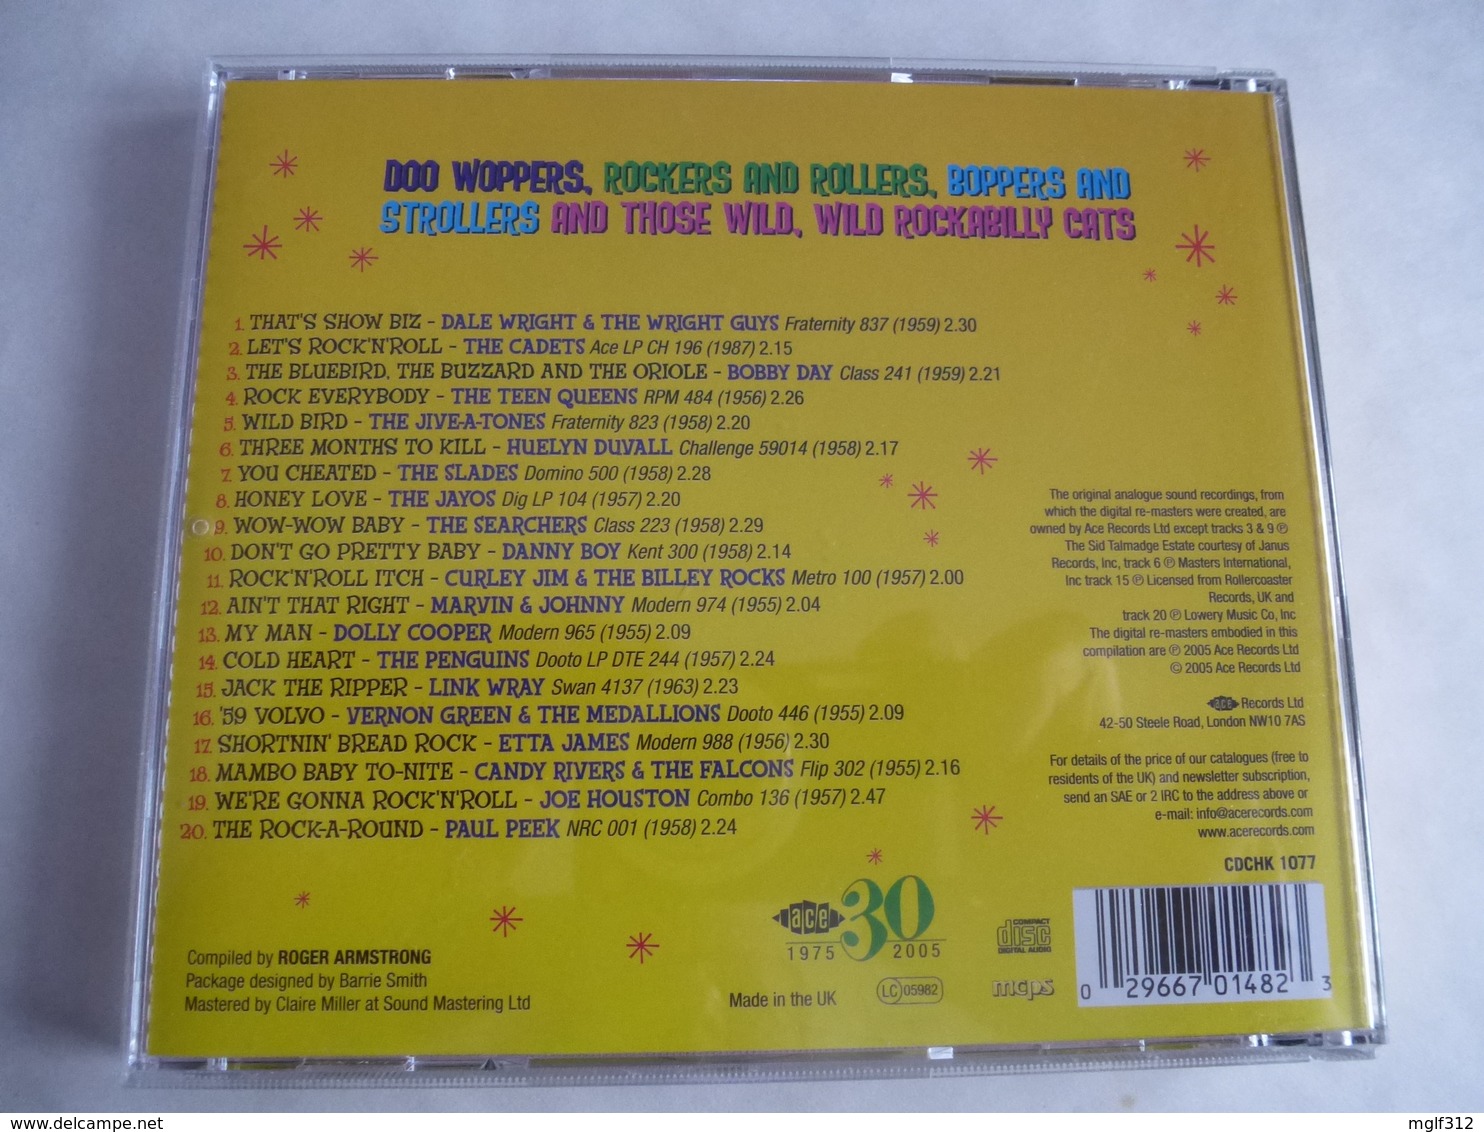 DOO WOP And ROCK'n'ROLL Compilation 1975-2005 - CD 20 Titres - Edition 2005 - Détails 2éme Scan - Blues